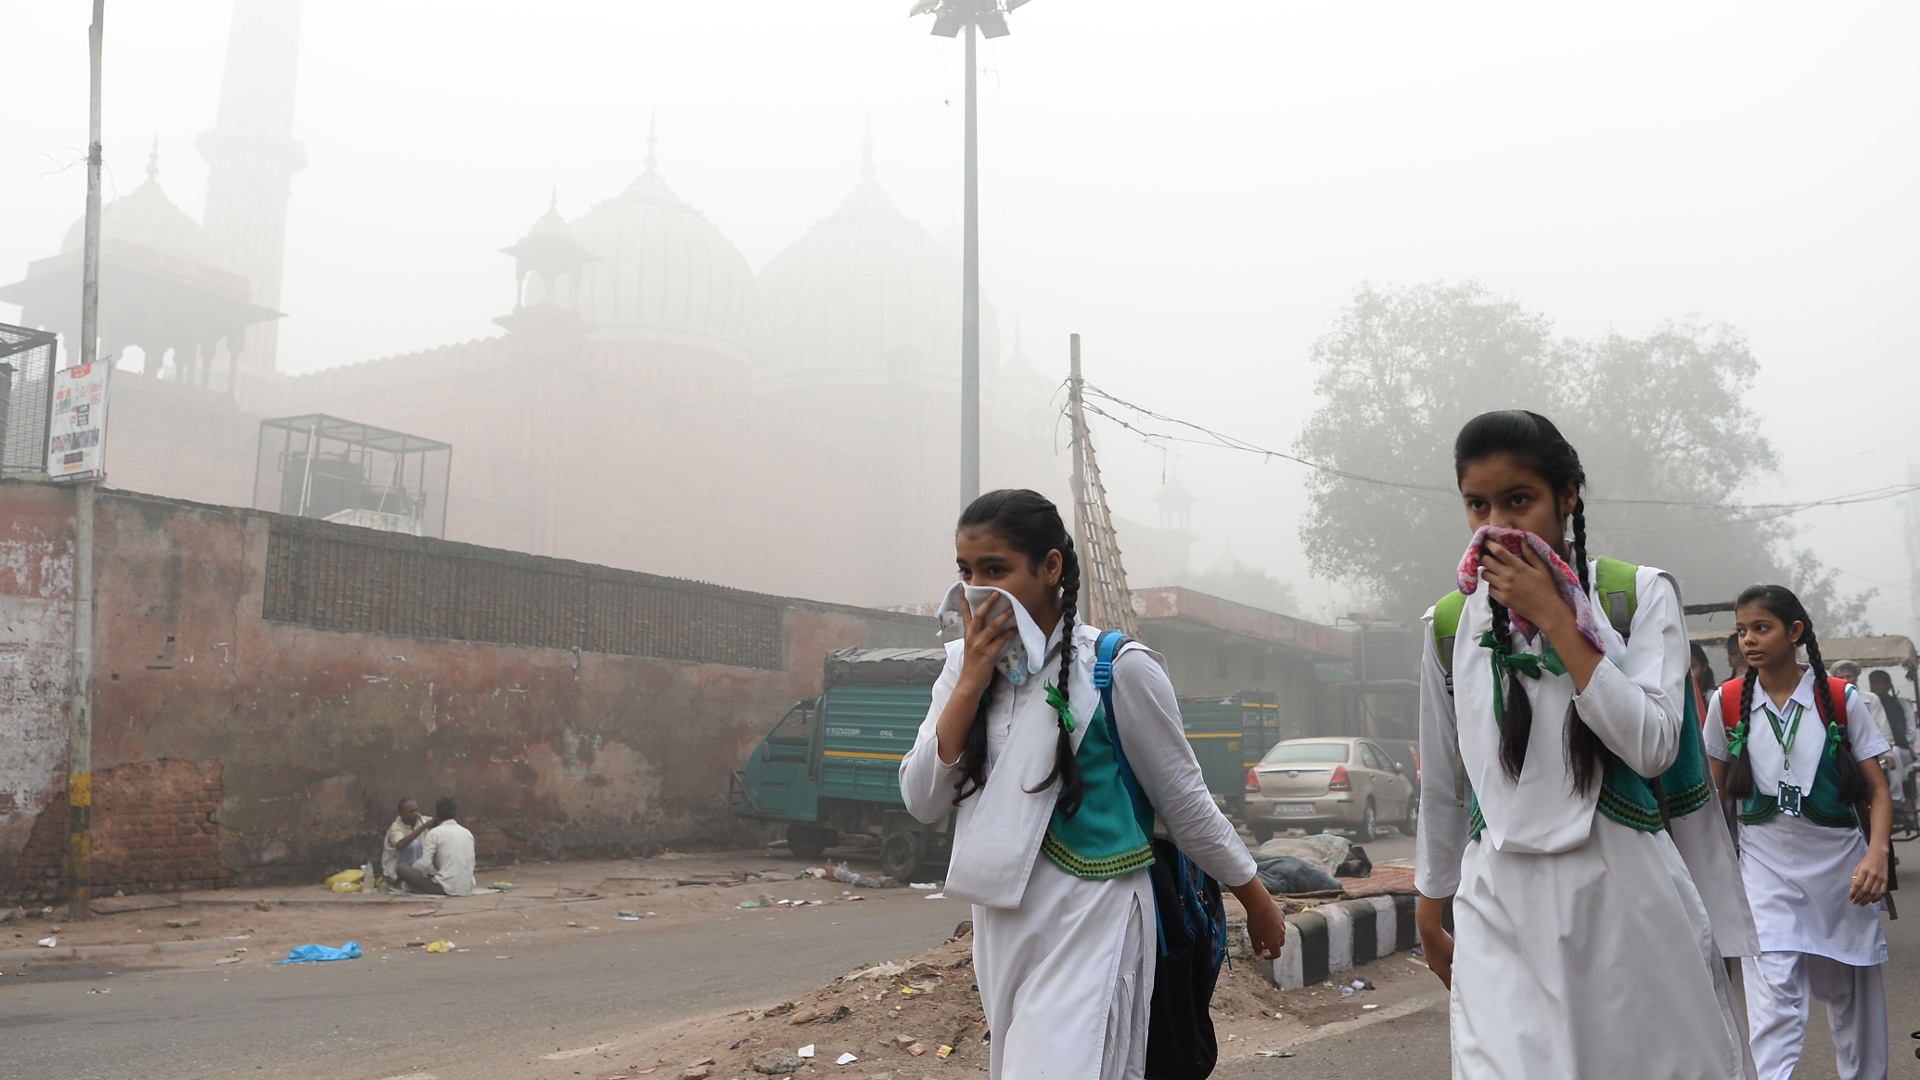 22-11-04-india-pollution.jpg